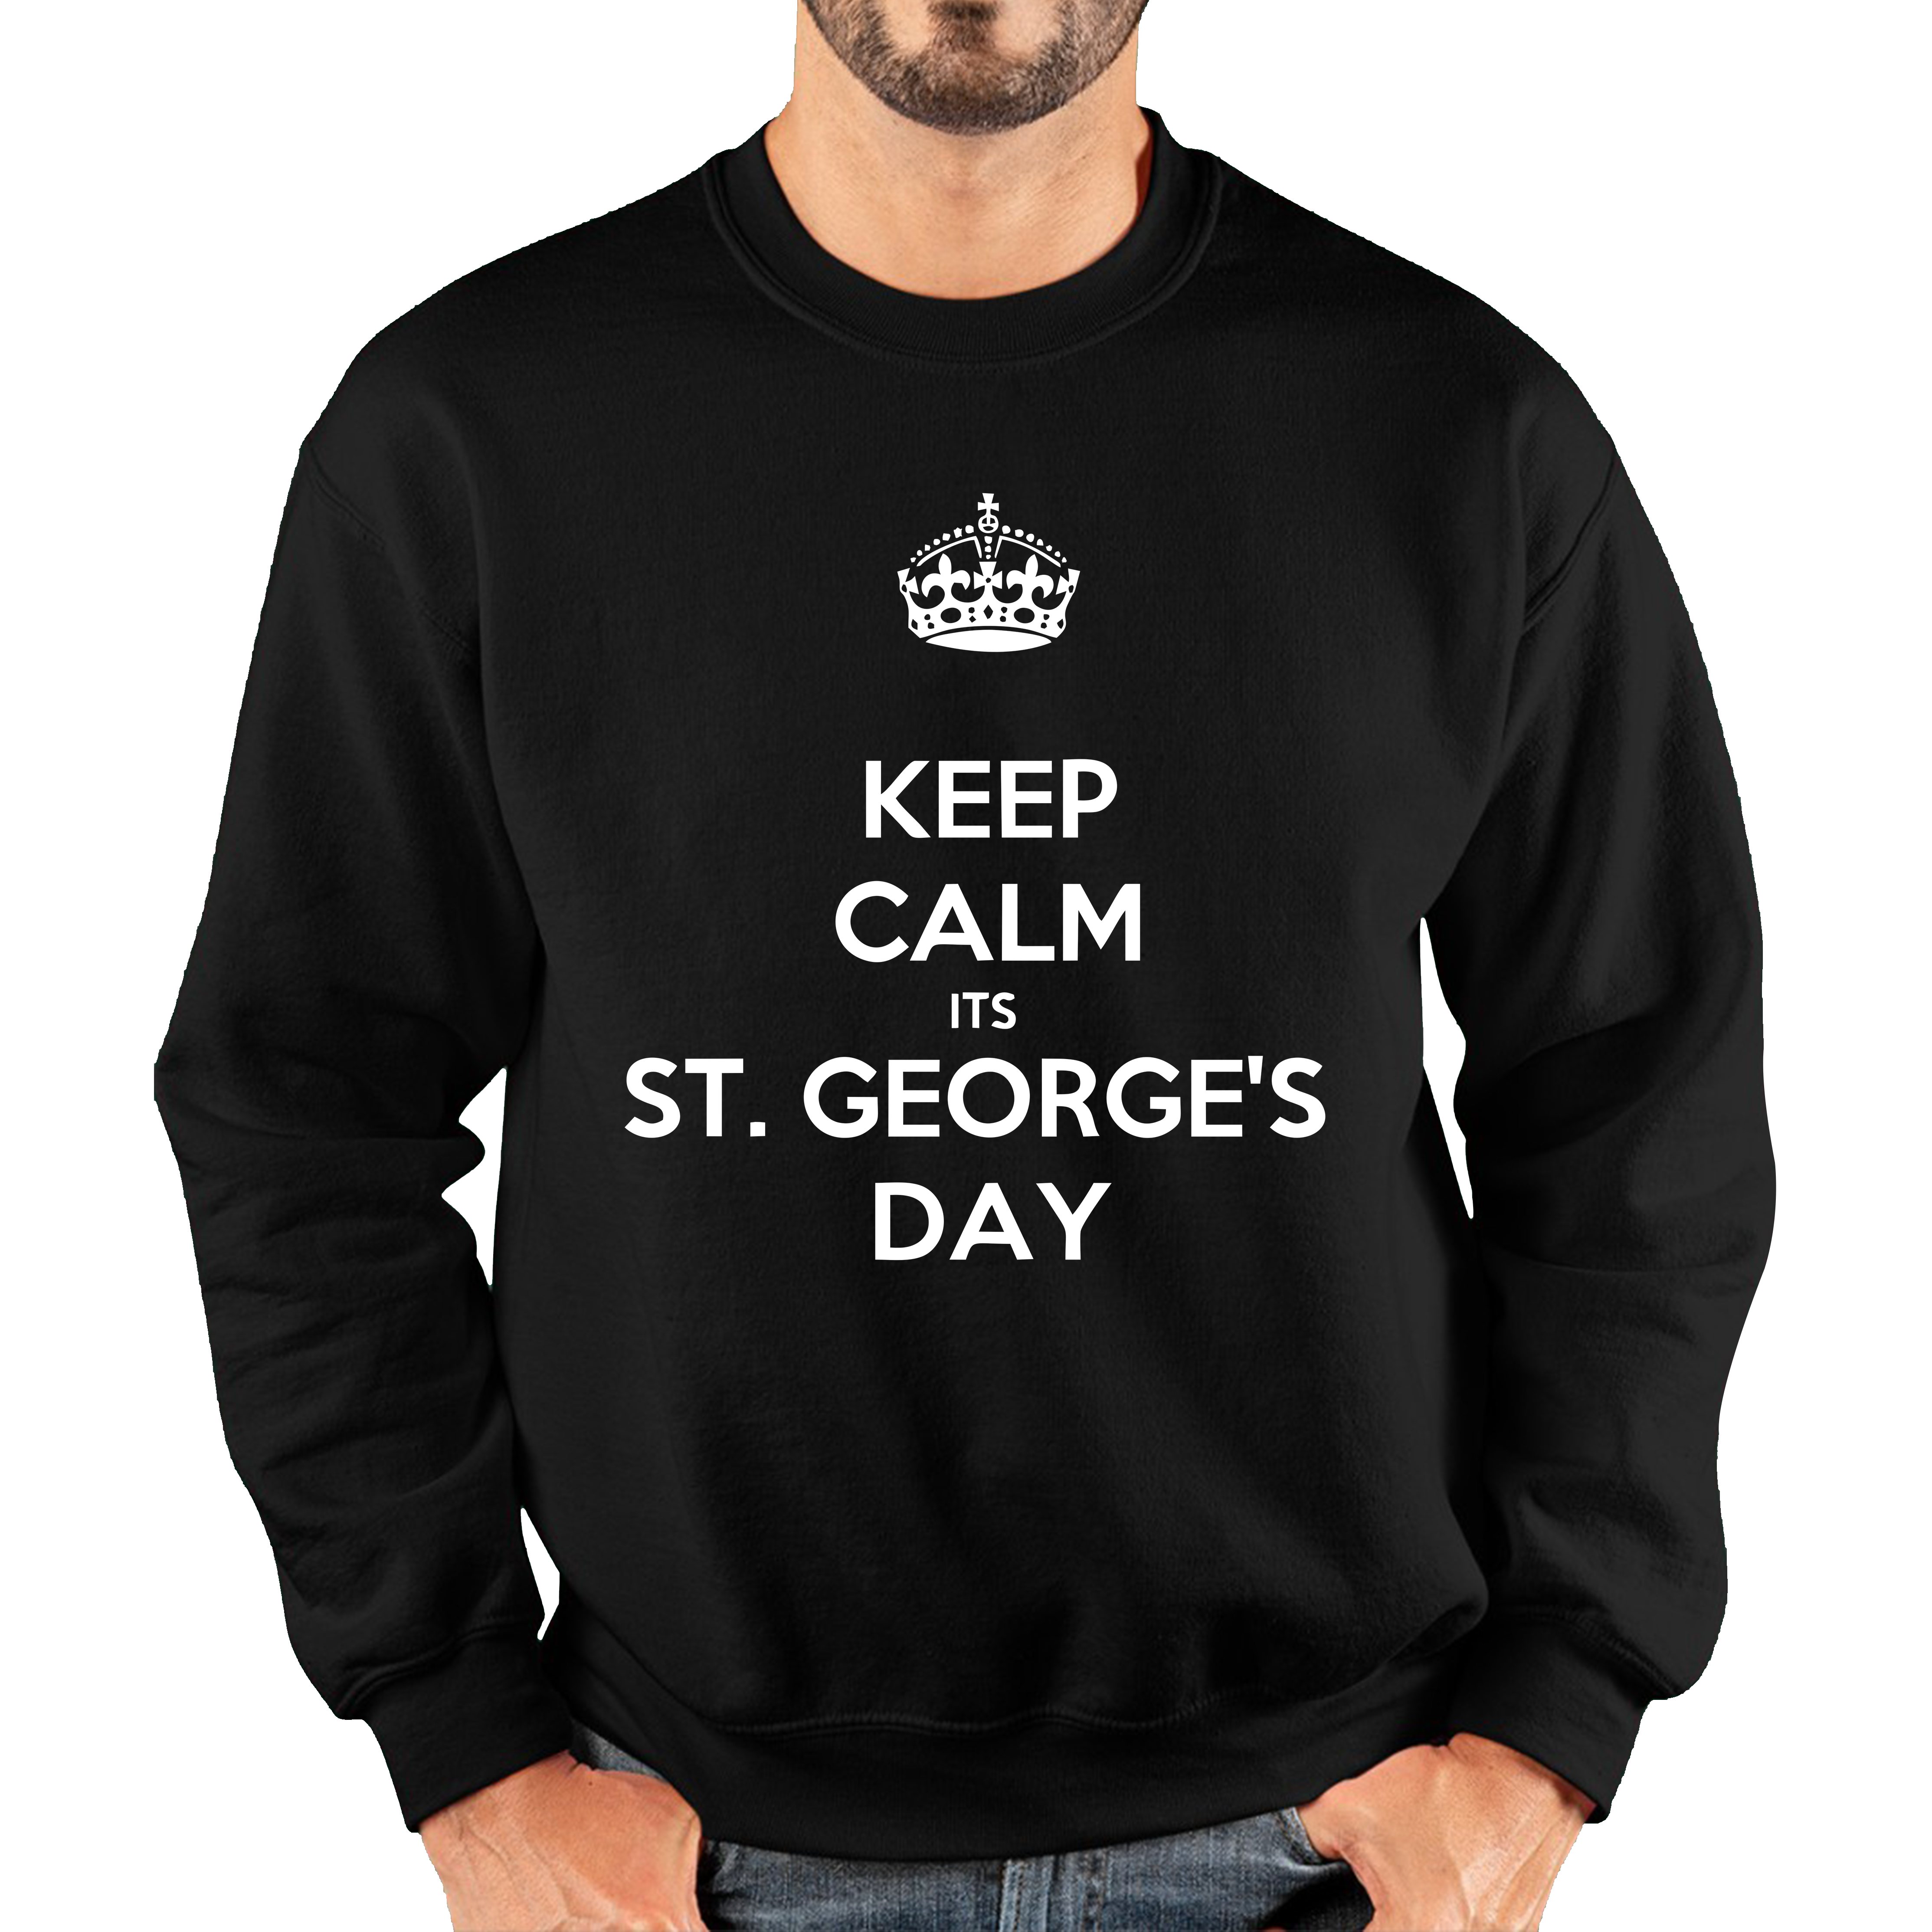 Keep Calm Its St. George's Day Adult Sweatshirt